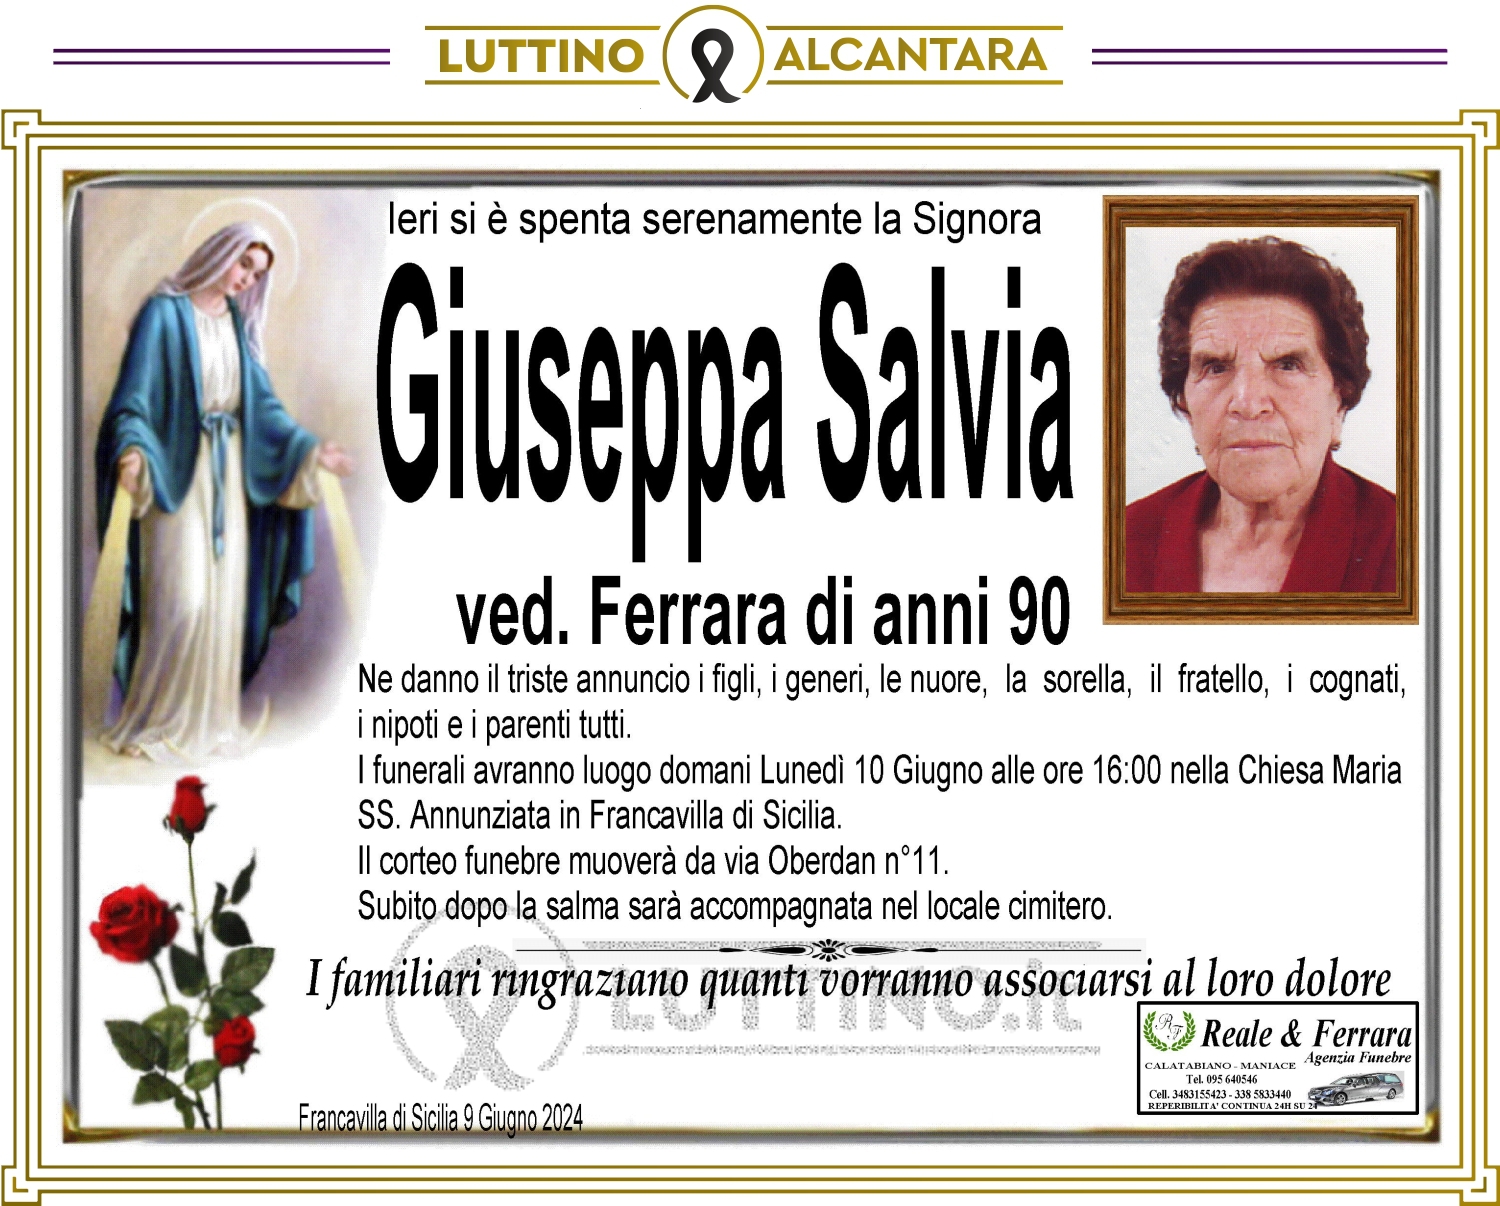 Giuseppa Salvia